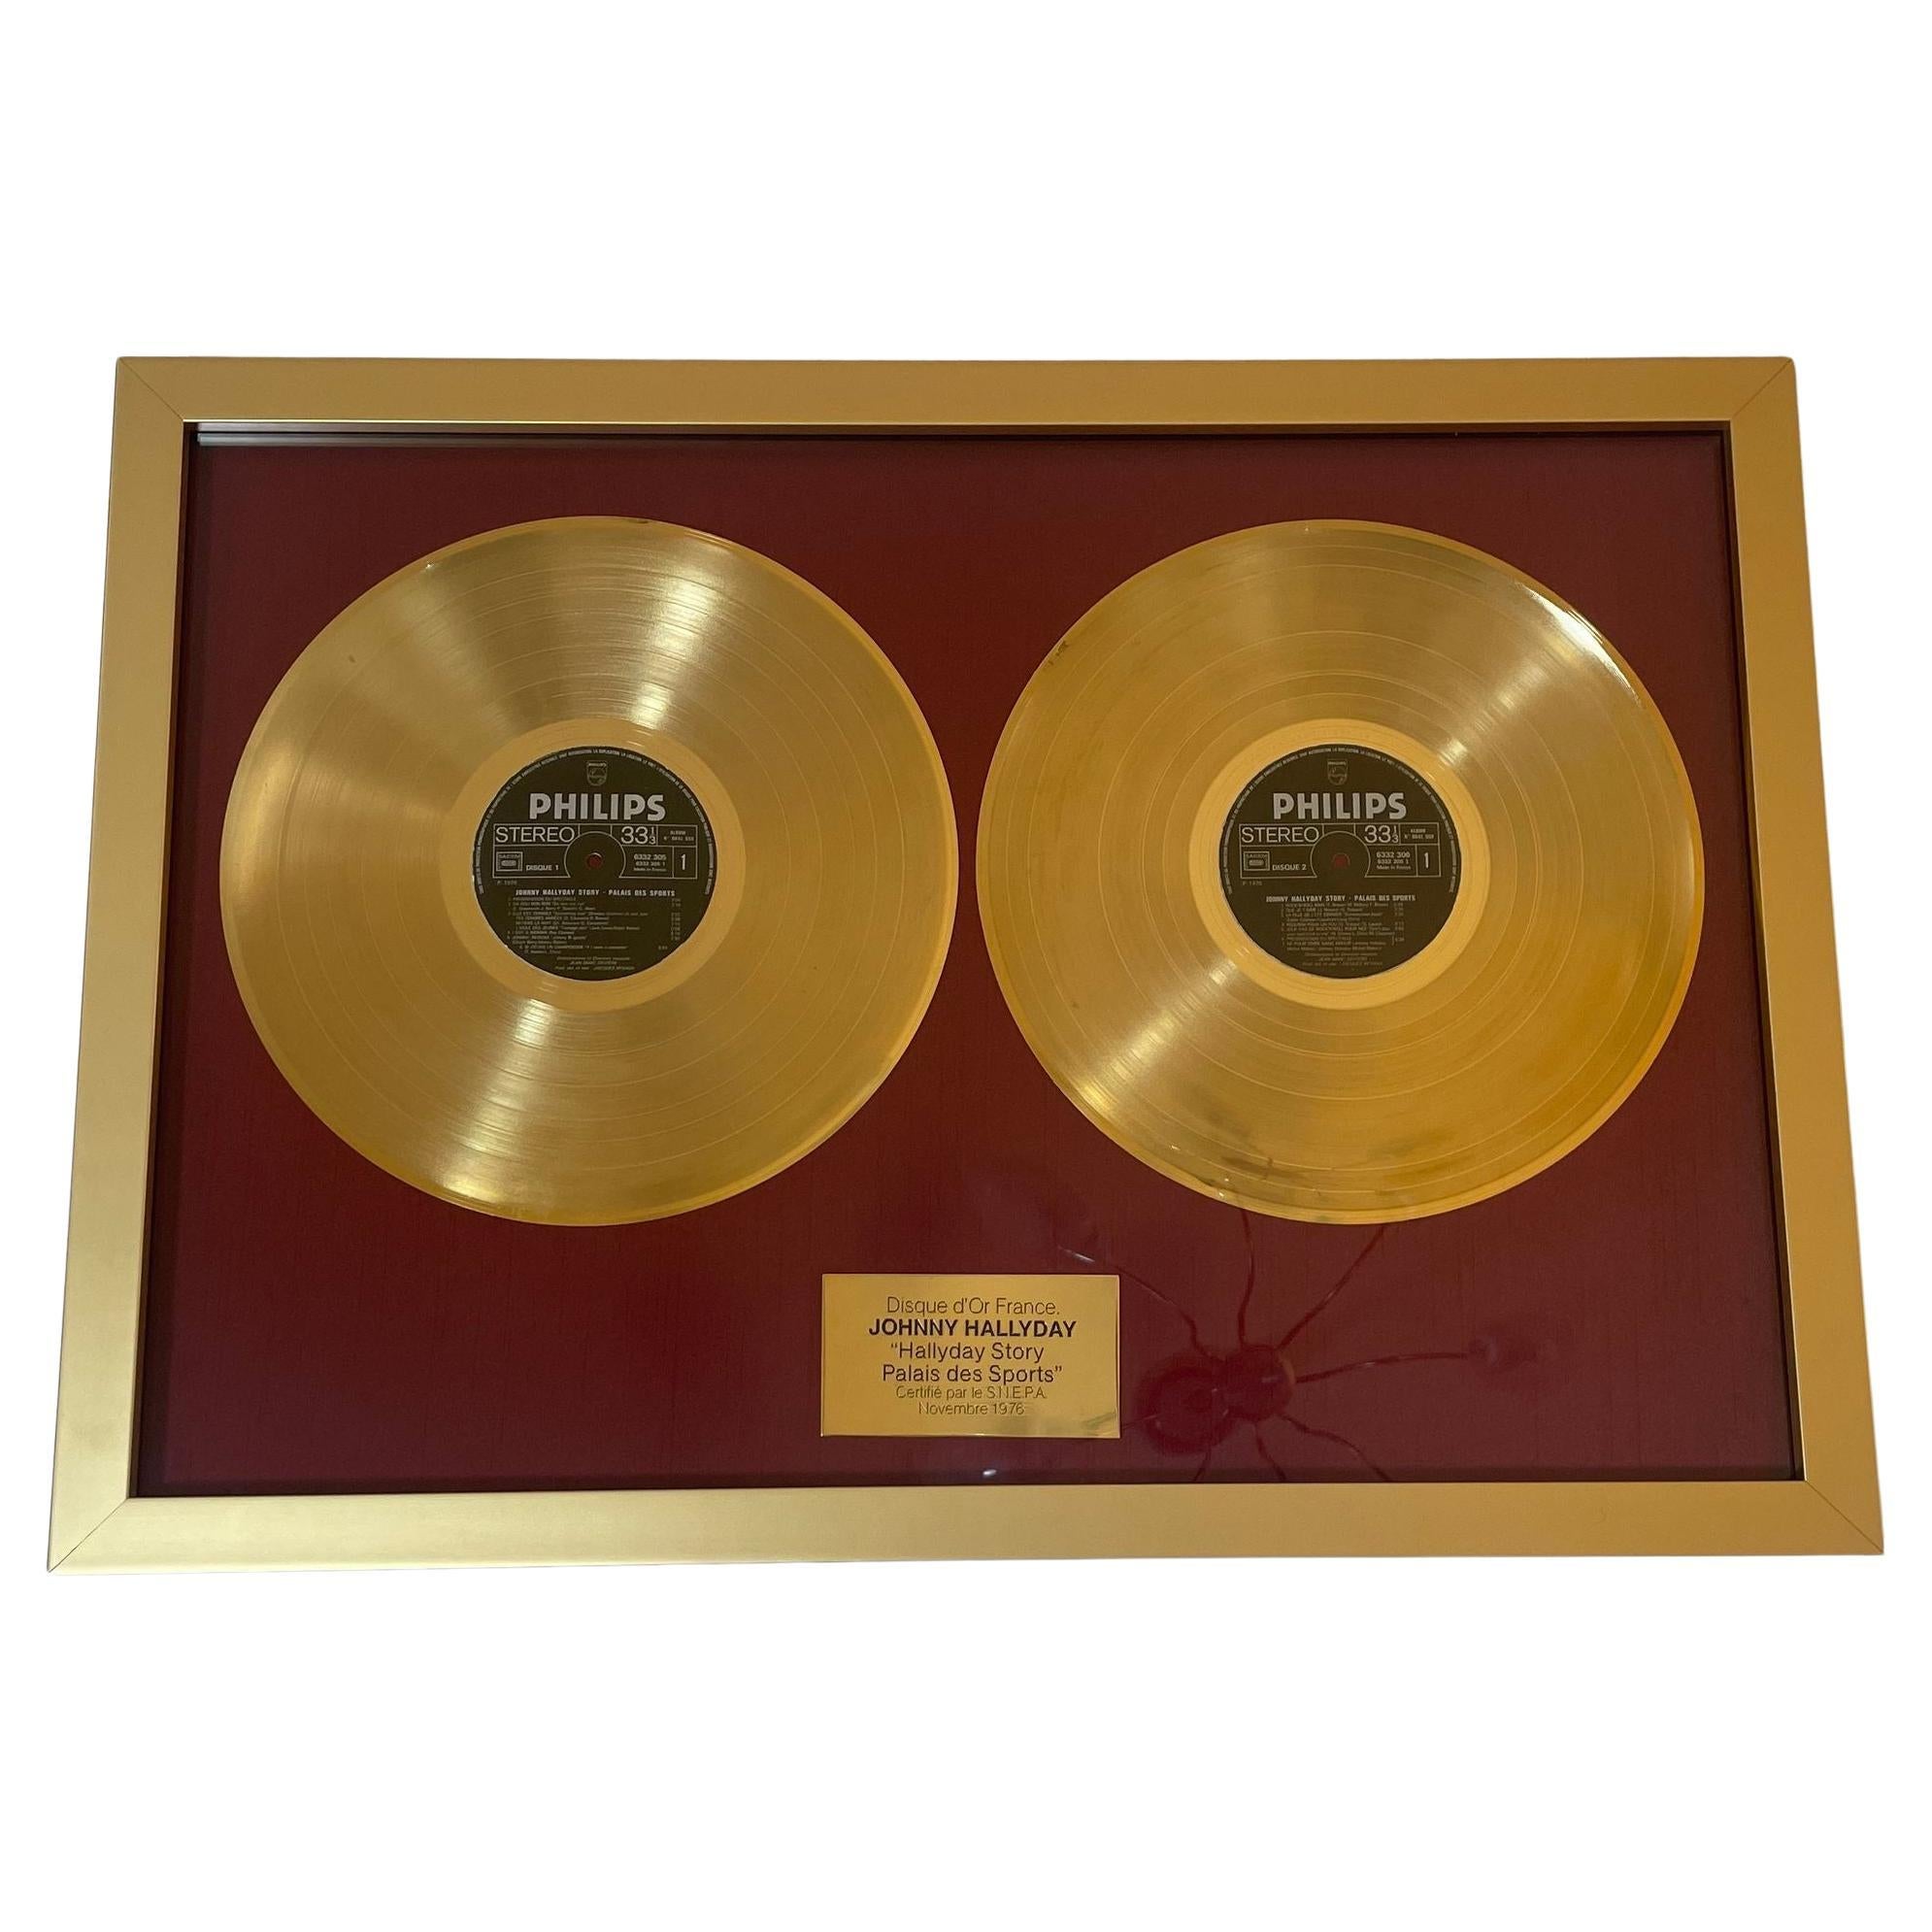 Official Gold Record Award France Johnny Halliday Story Palais des Sports 1976